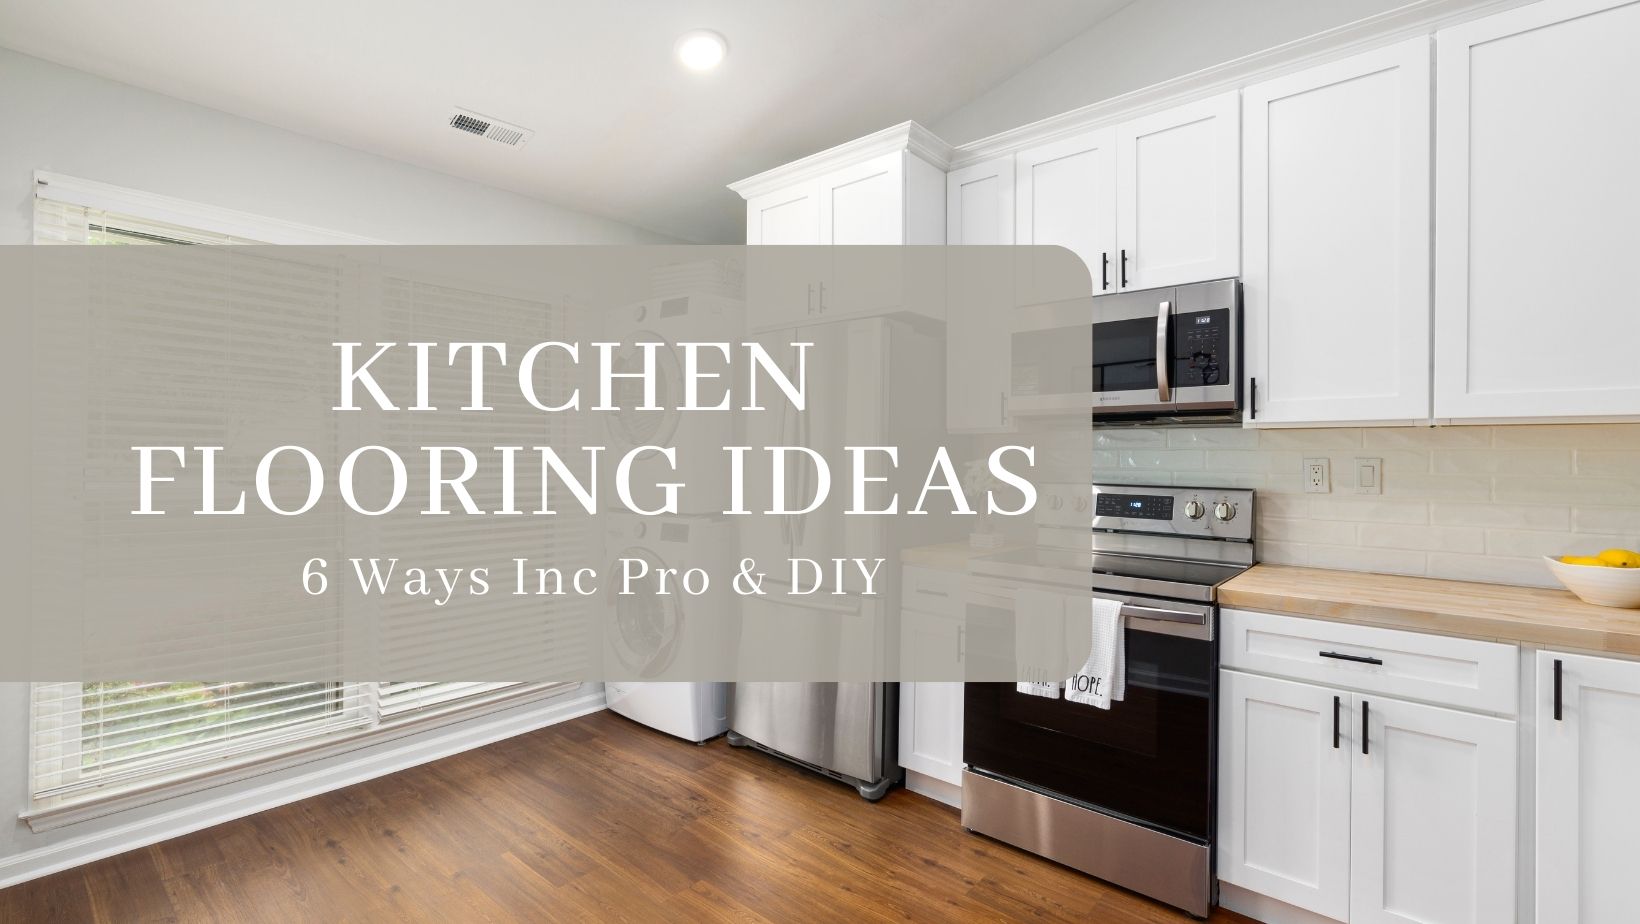 Kitchen Flooring Ideas: 6 Wonderful Options (Inc Pro & DIY)